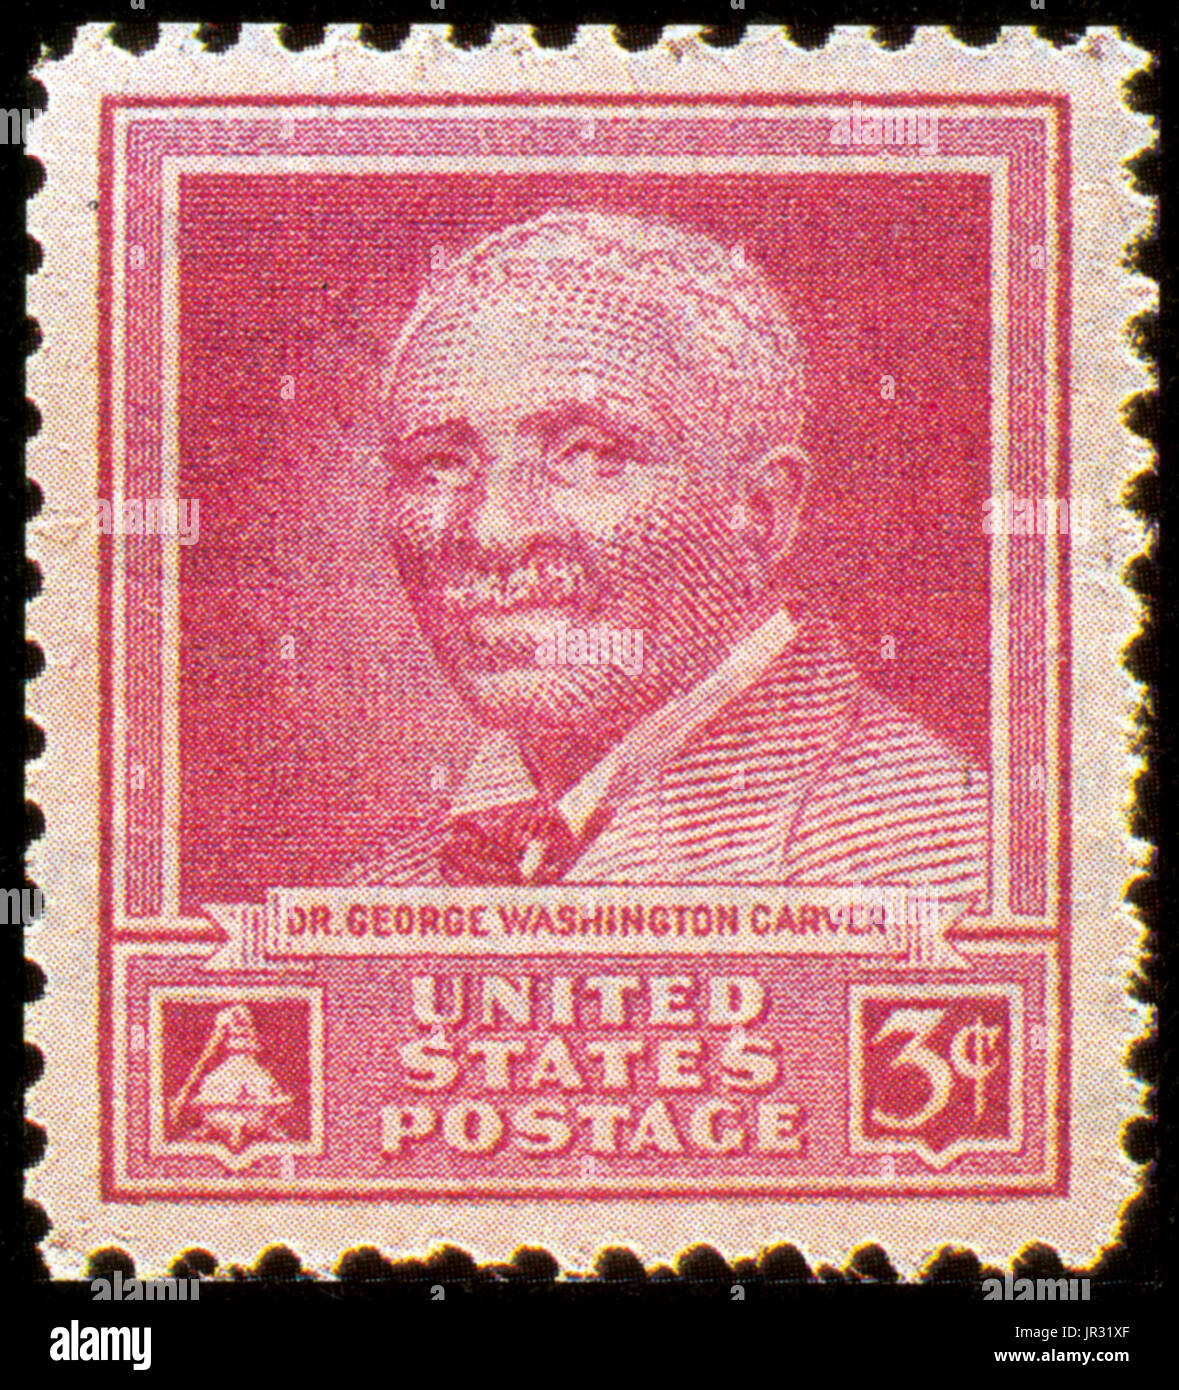 George W. Carver,U.S. Postage Stamp,1948 Stock Photo